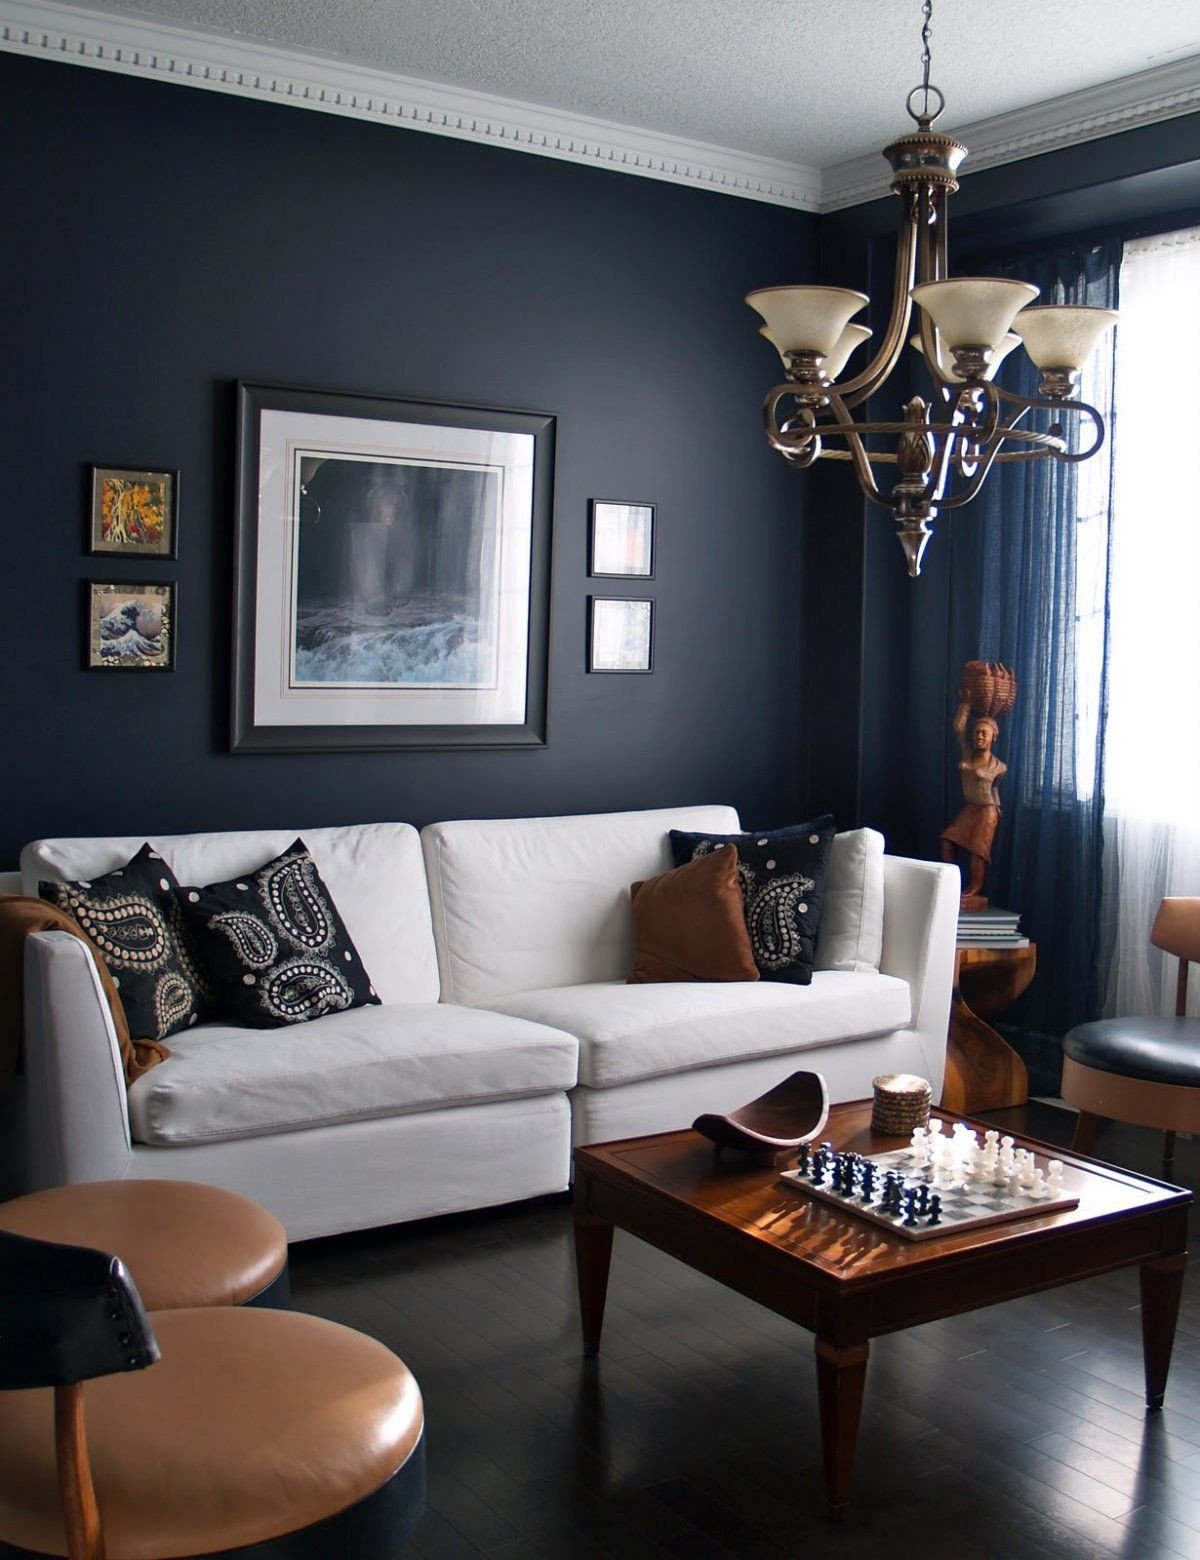 Blue and Tan Bedroom Inspirational 15 Beautiful Dark Blue Wall Design Ideas